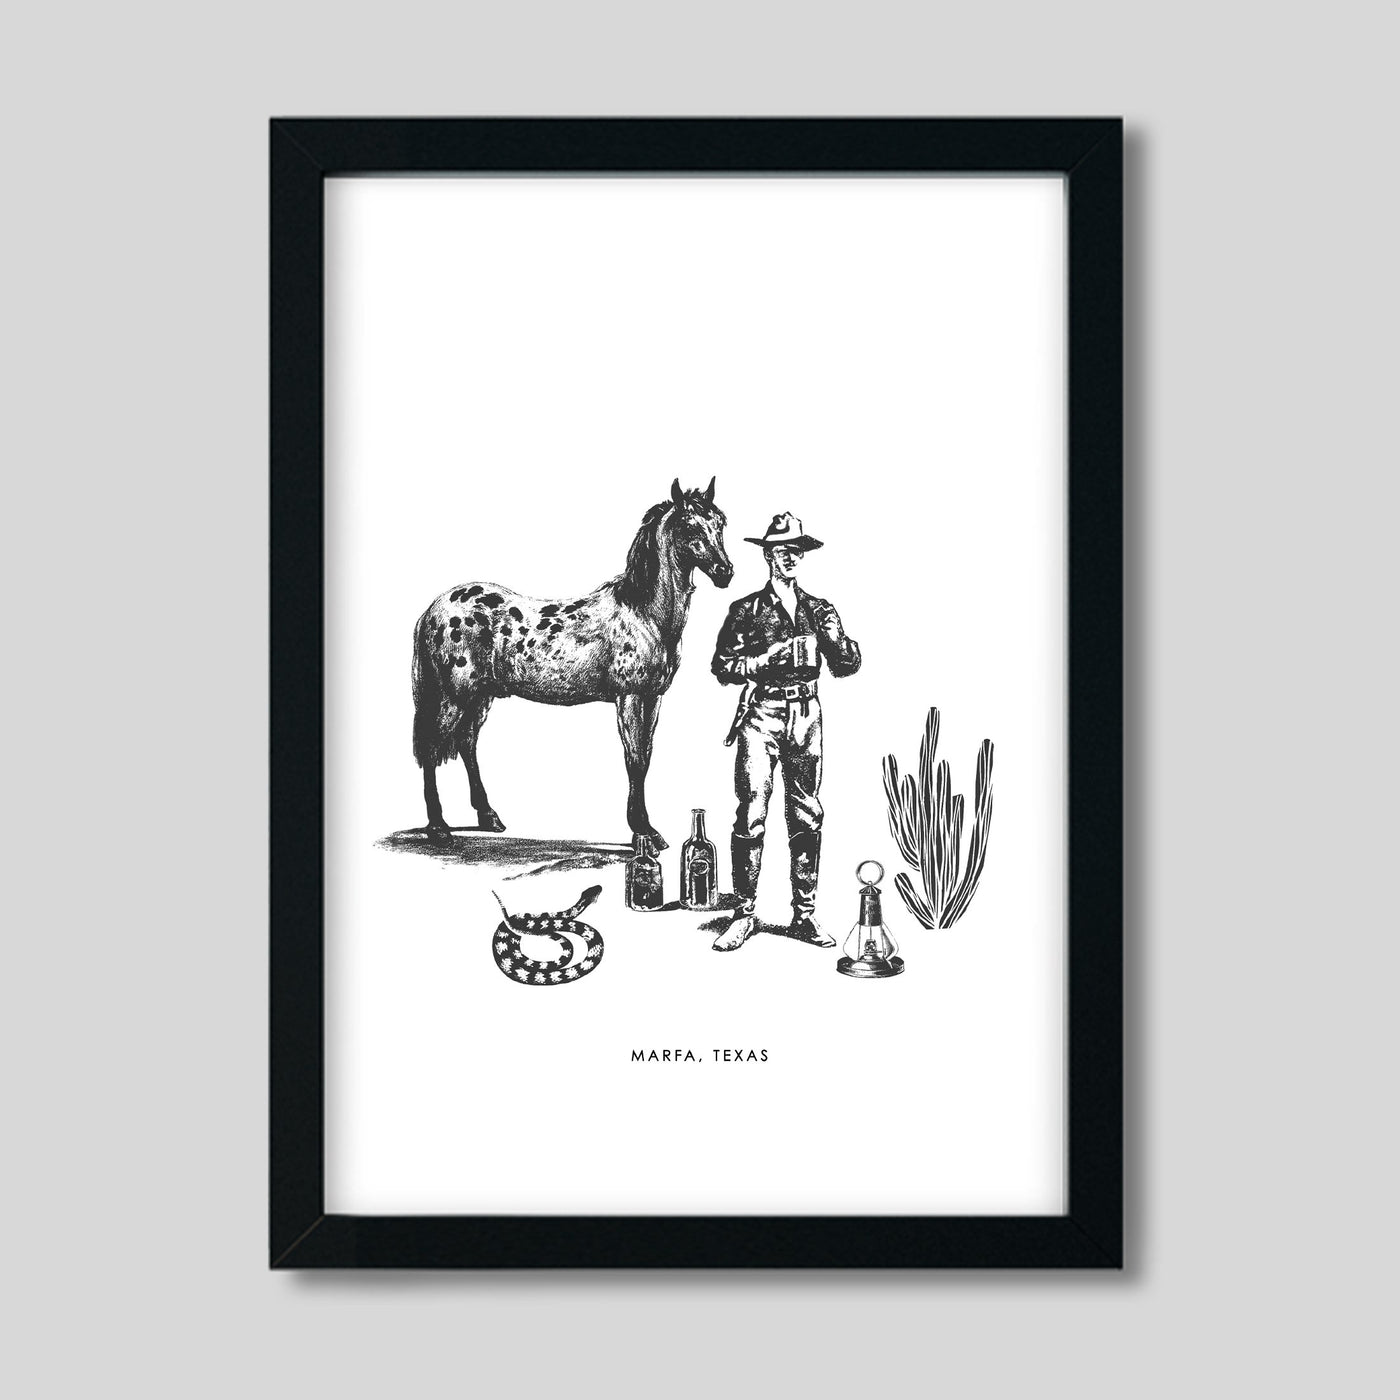 Gallery Prints Black / 8x10 / Black Frame Marfa Cowboy Print Katie Kime